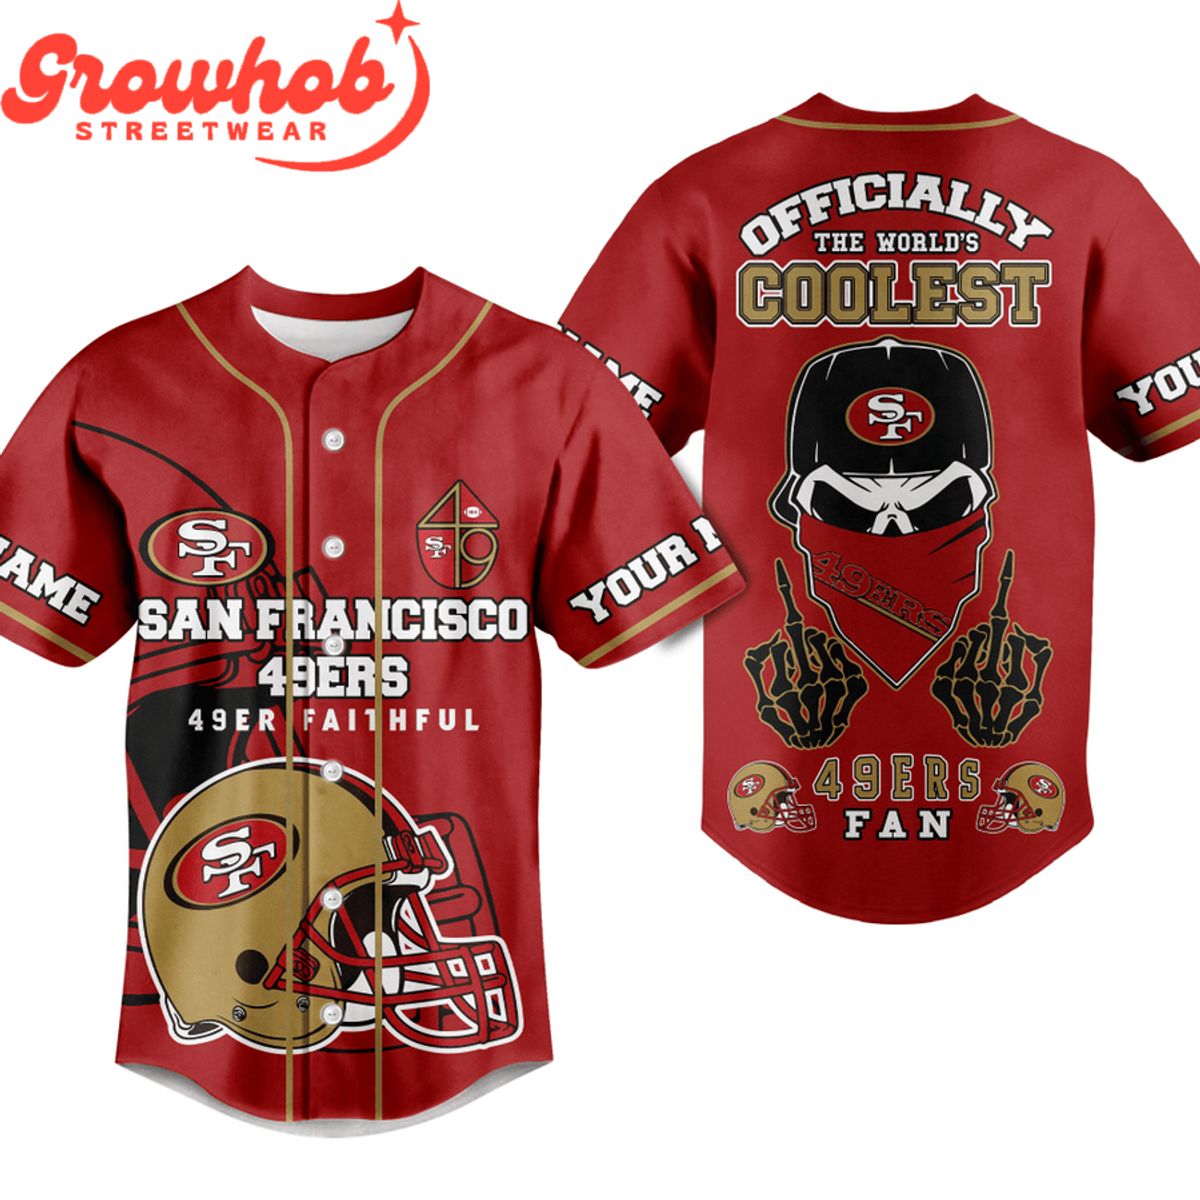 San Francisco 49ers Coolest Fan Personalized Baseball Jersey